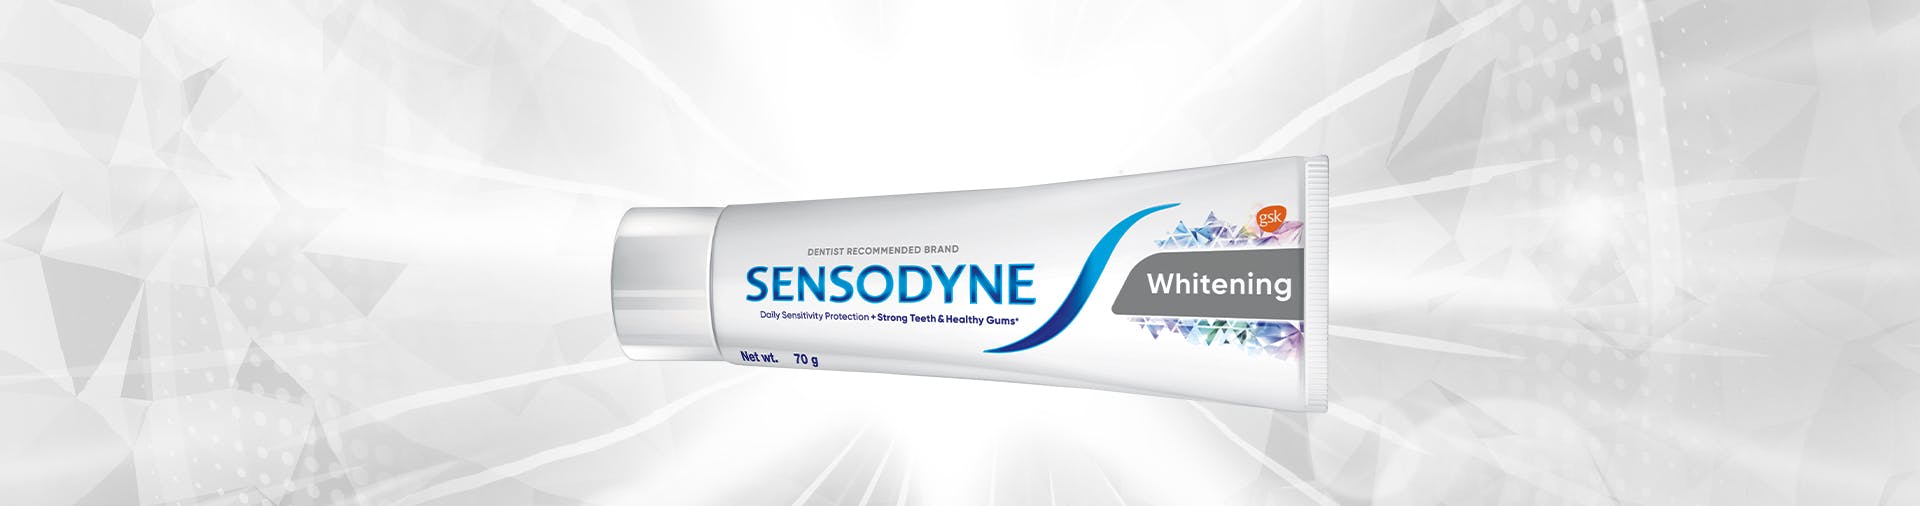 Sensodyne Gentle Whitening campaign banner